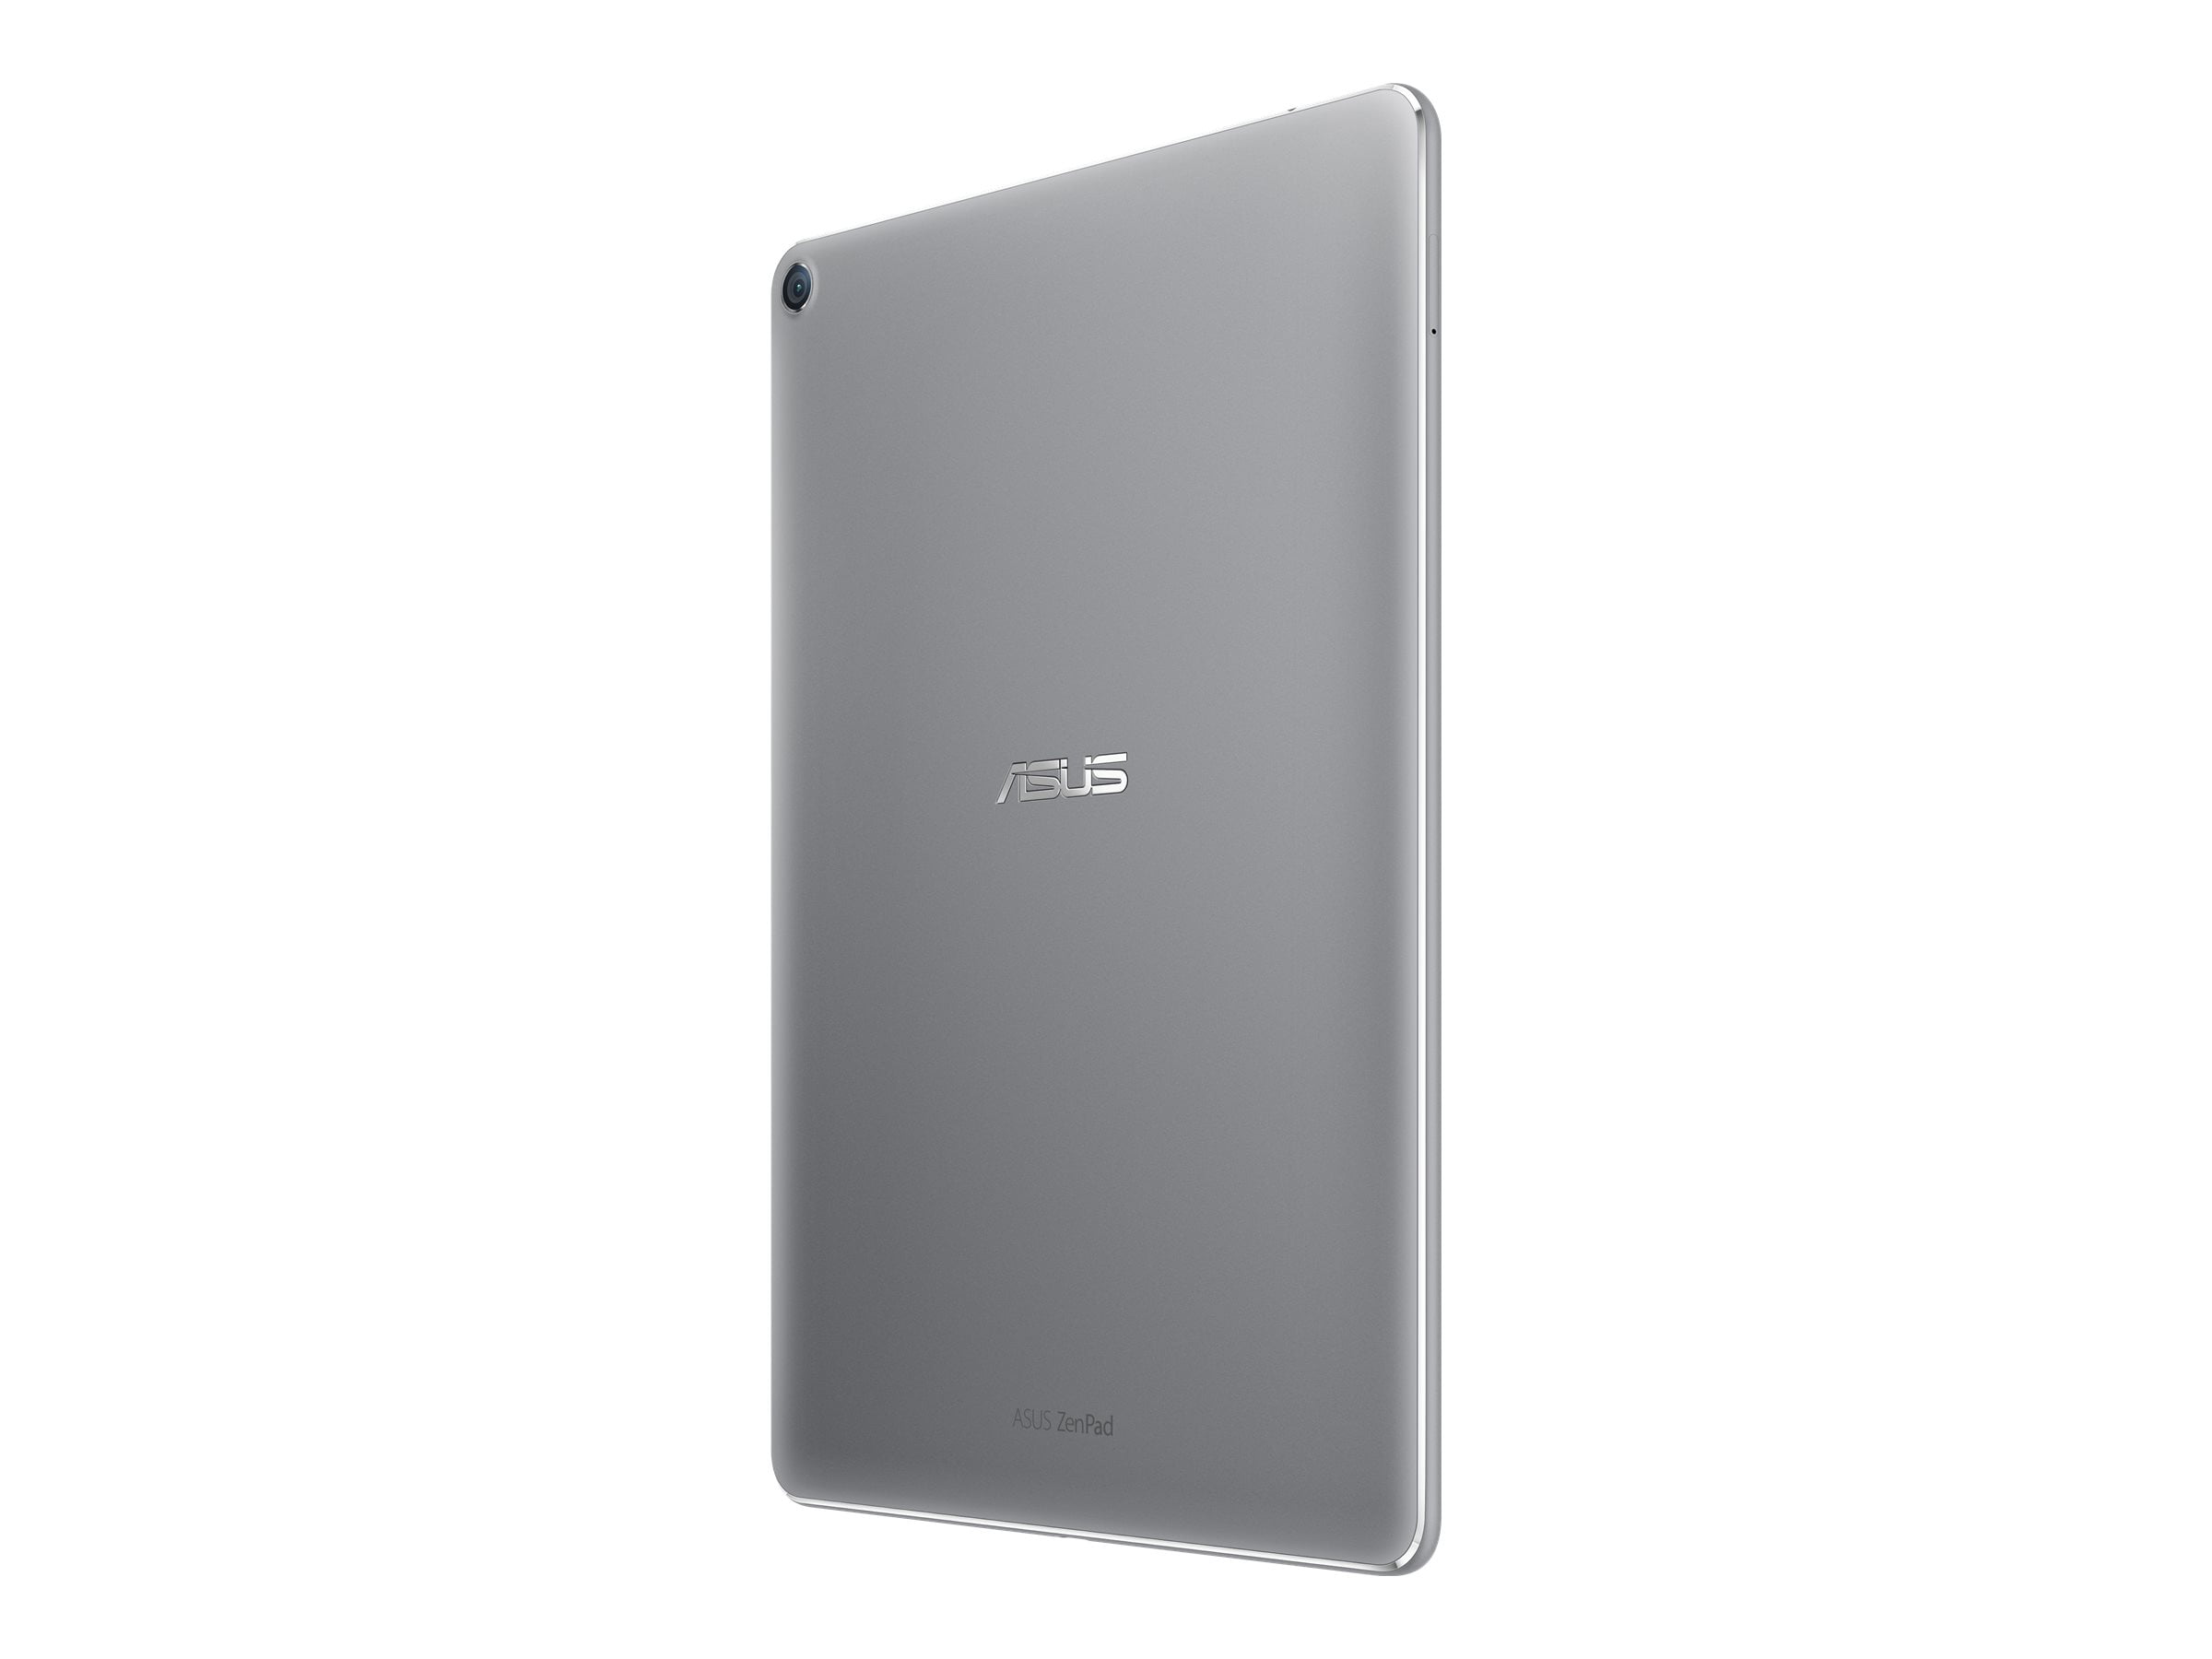 Asus Zenpad 3s 10 Z500m Tablet Android 6 0 Marshmallow 64 Gb Emmc 9 7 Ips 48 X 1536 Microsd Slot Titanium Gray Walmart Com Walmart Com